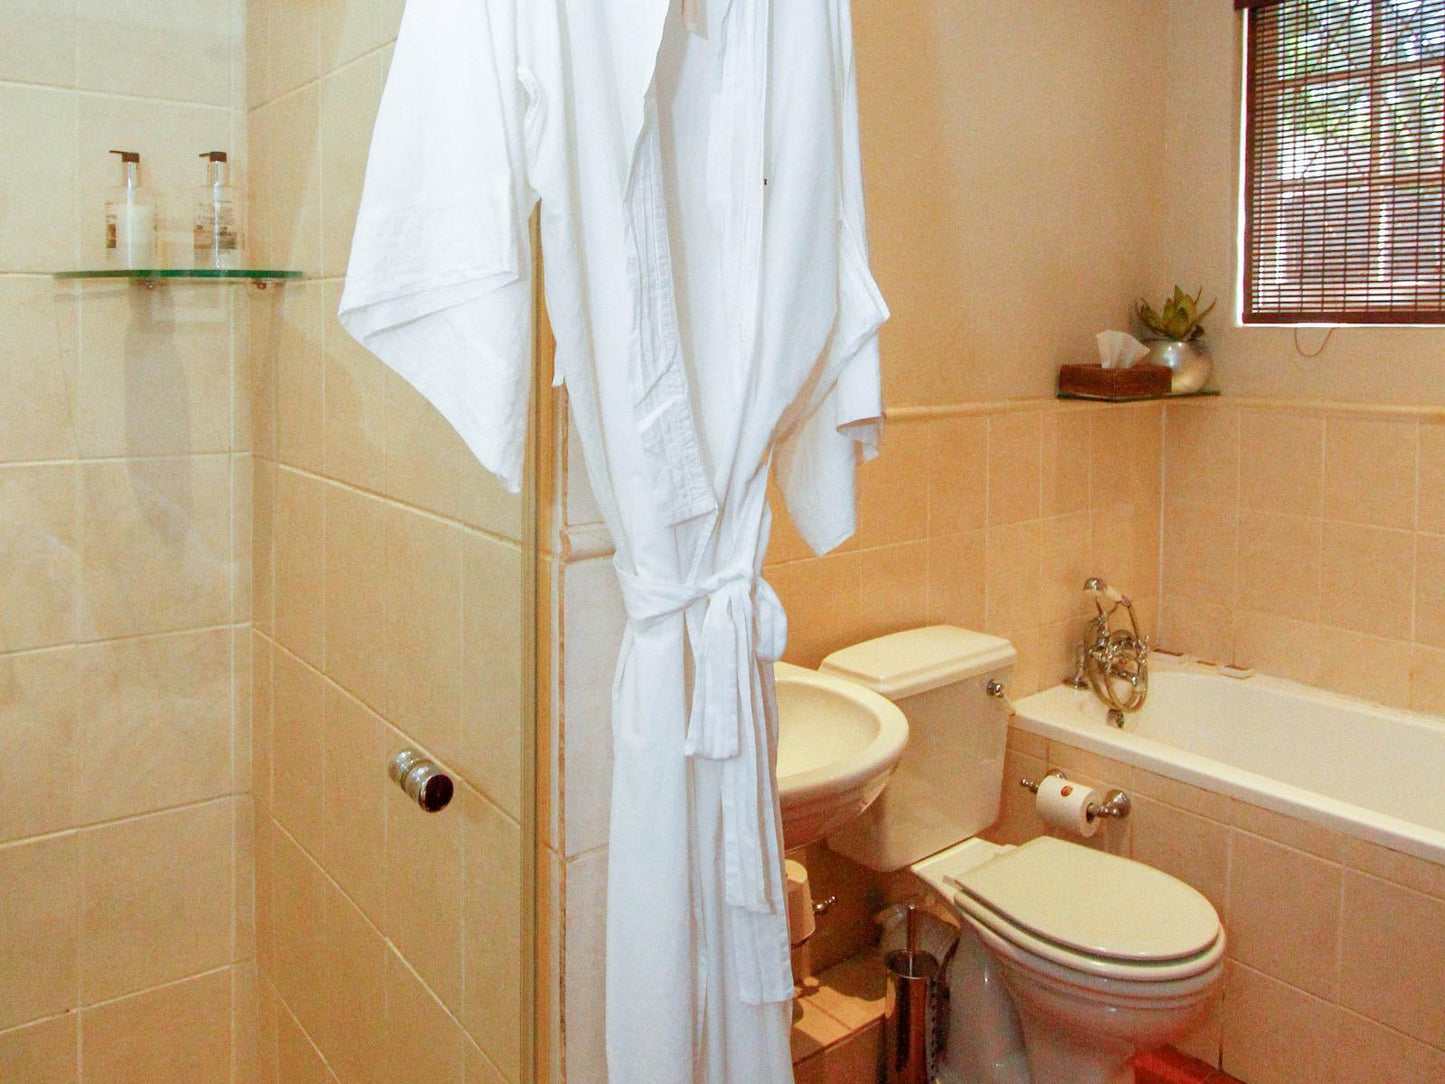 Standard Room bath & shower ensuite @ Five Burnham Guest House